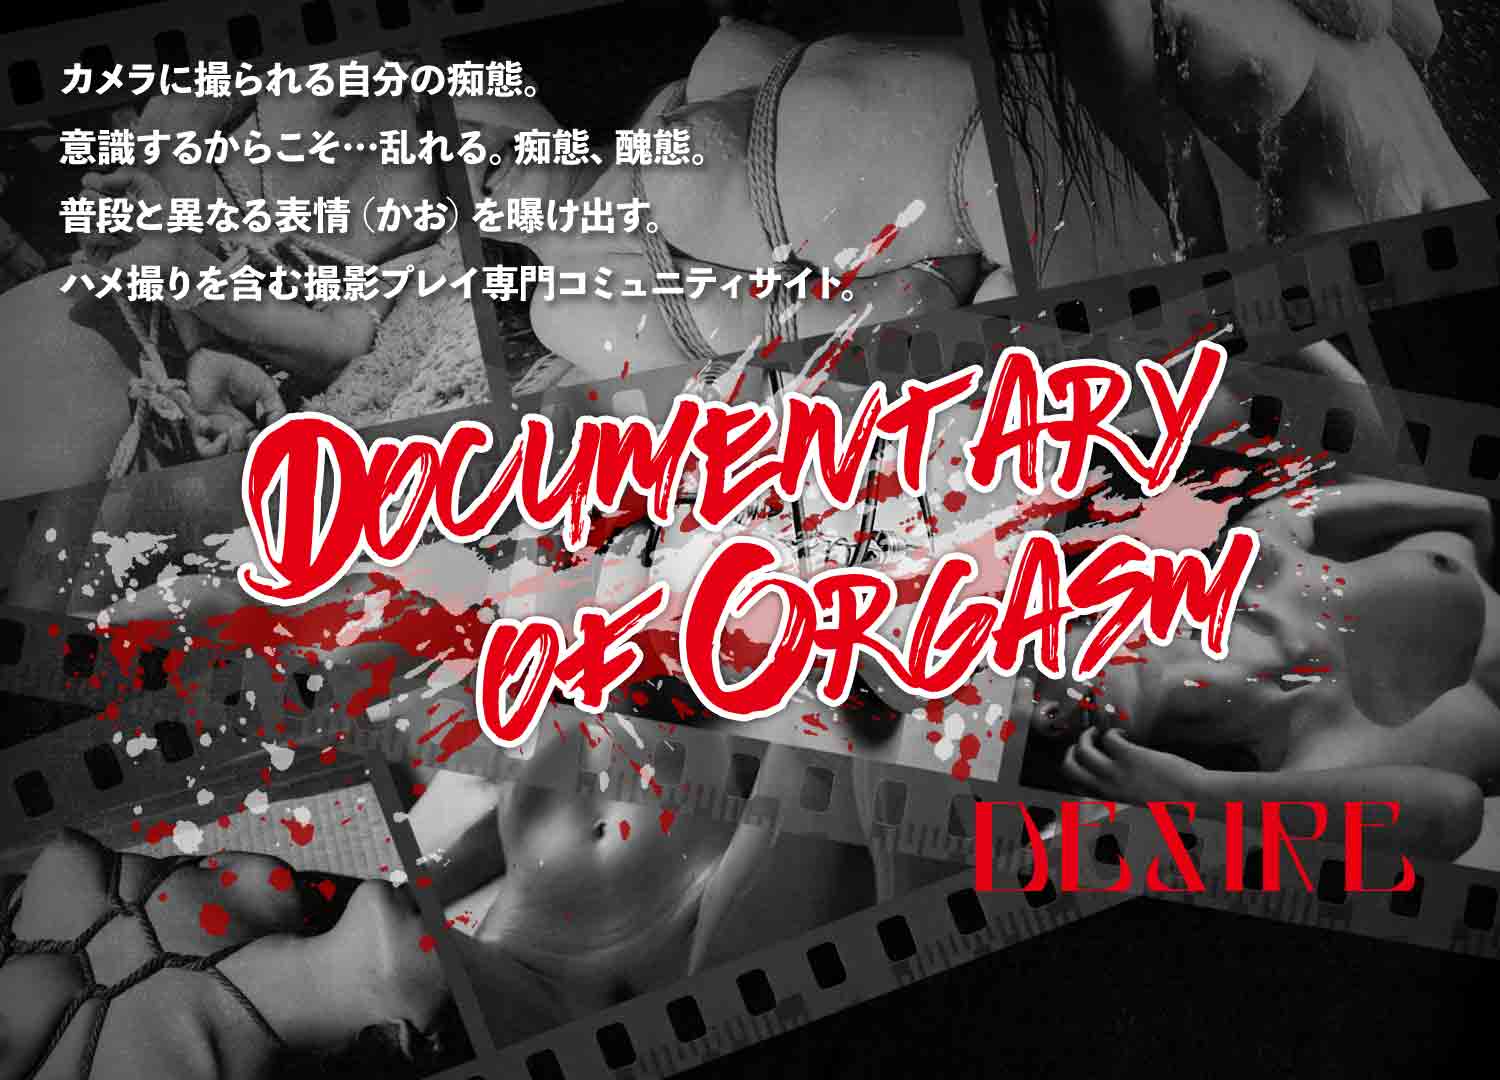 DESIRE - Documentary of Orgasm